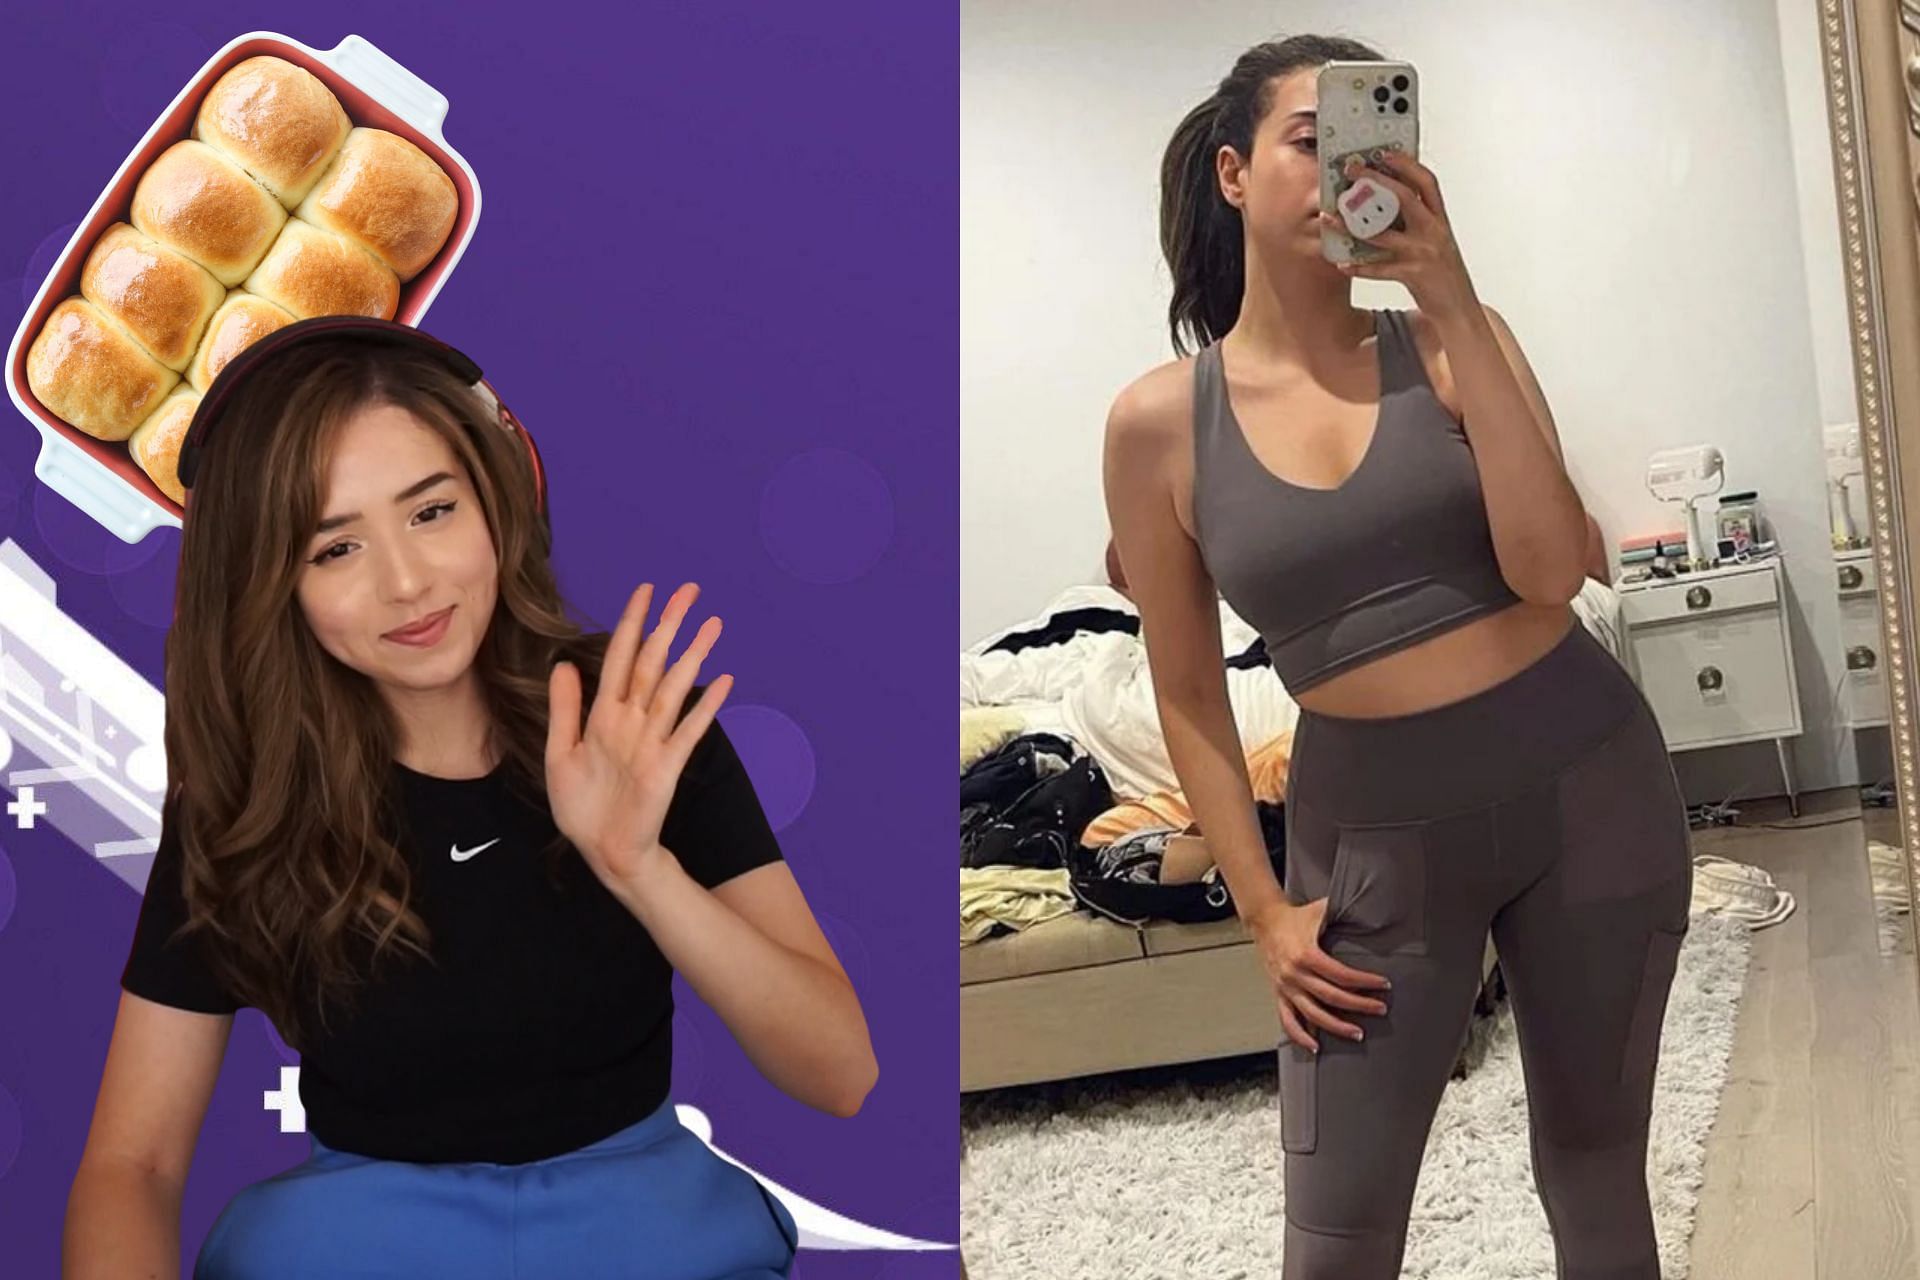 Twitch streamer Pokimane got trolled over her fitness journey (Image via Sportskeeda)